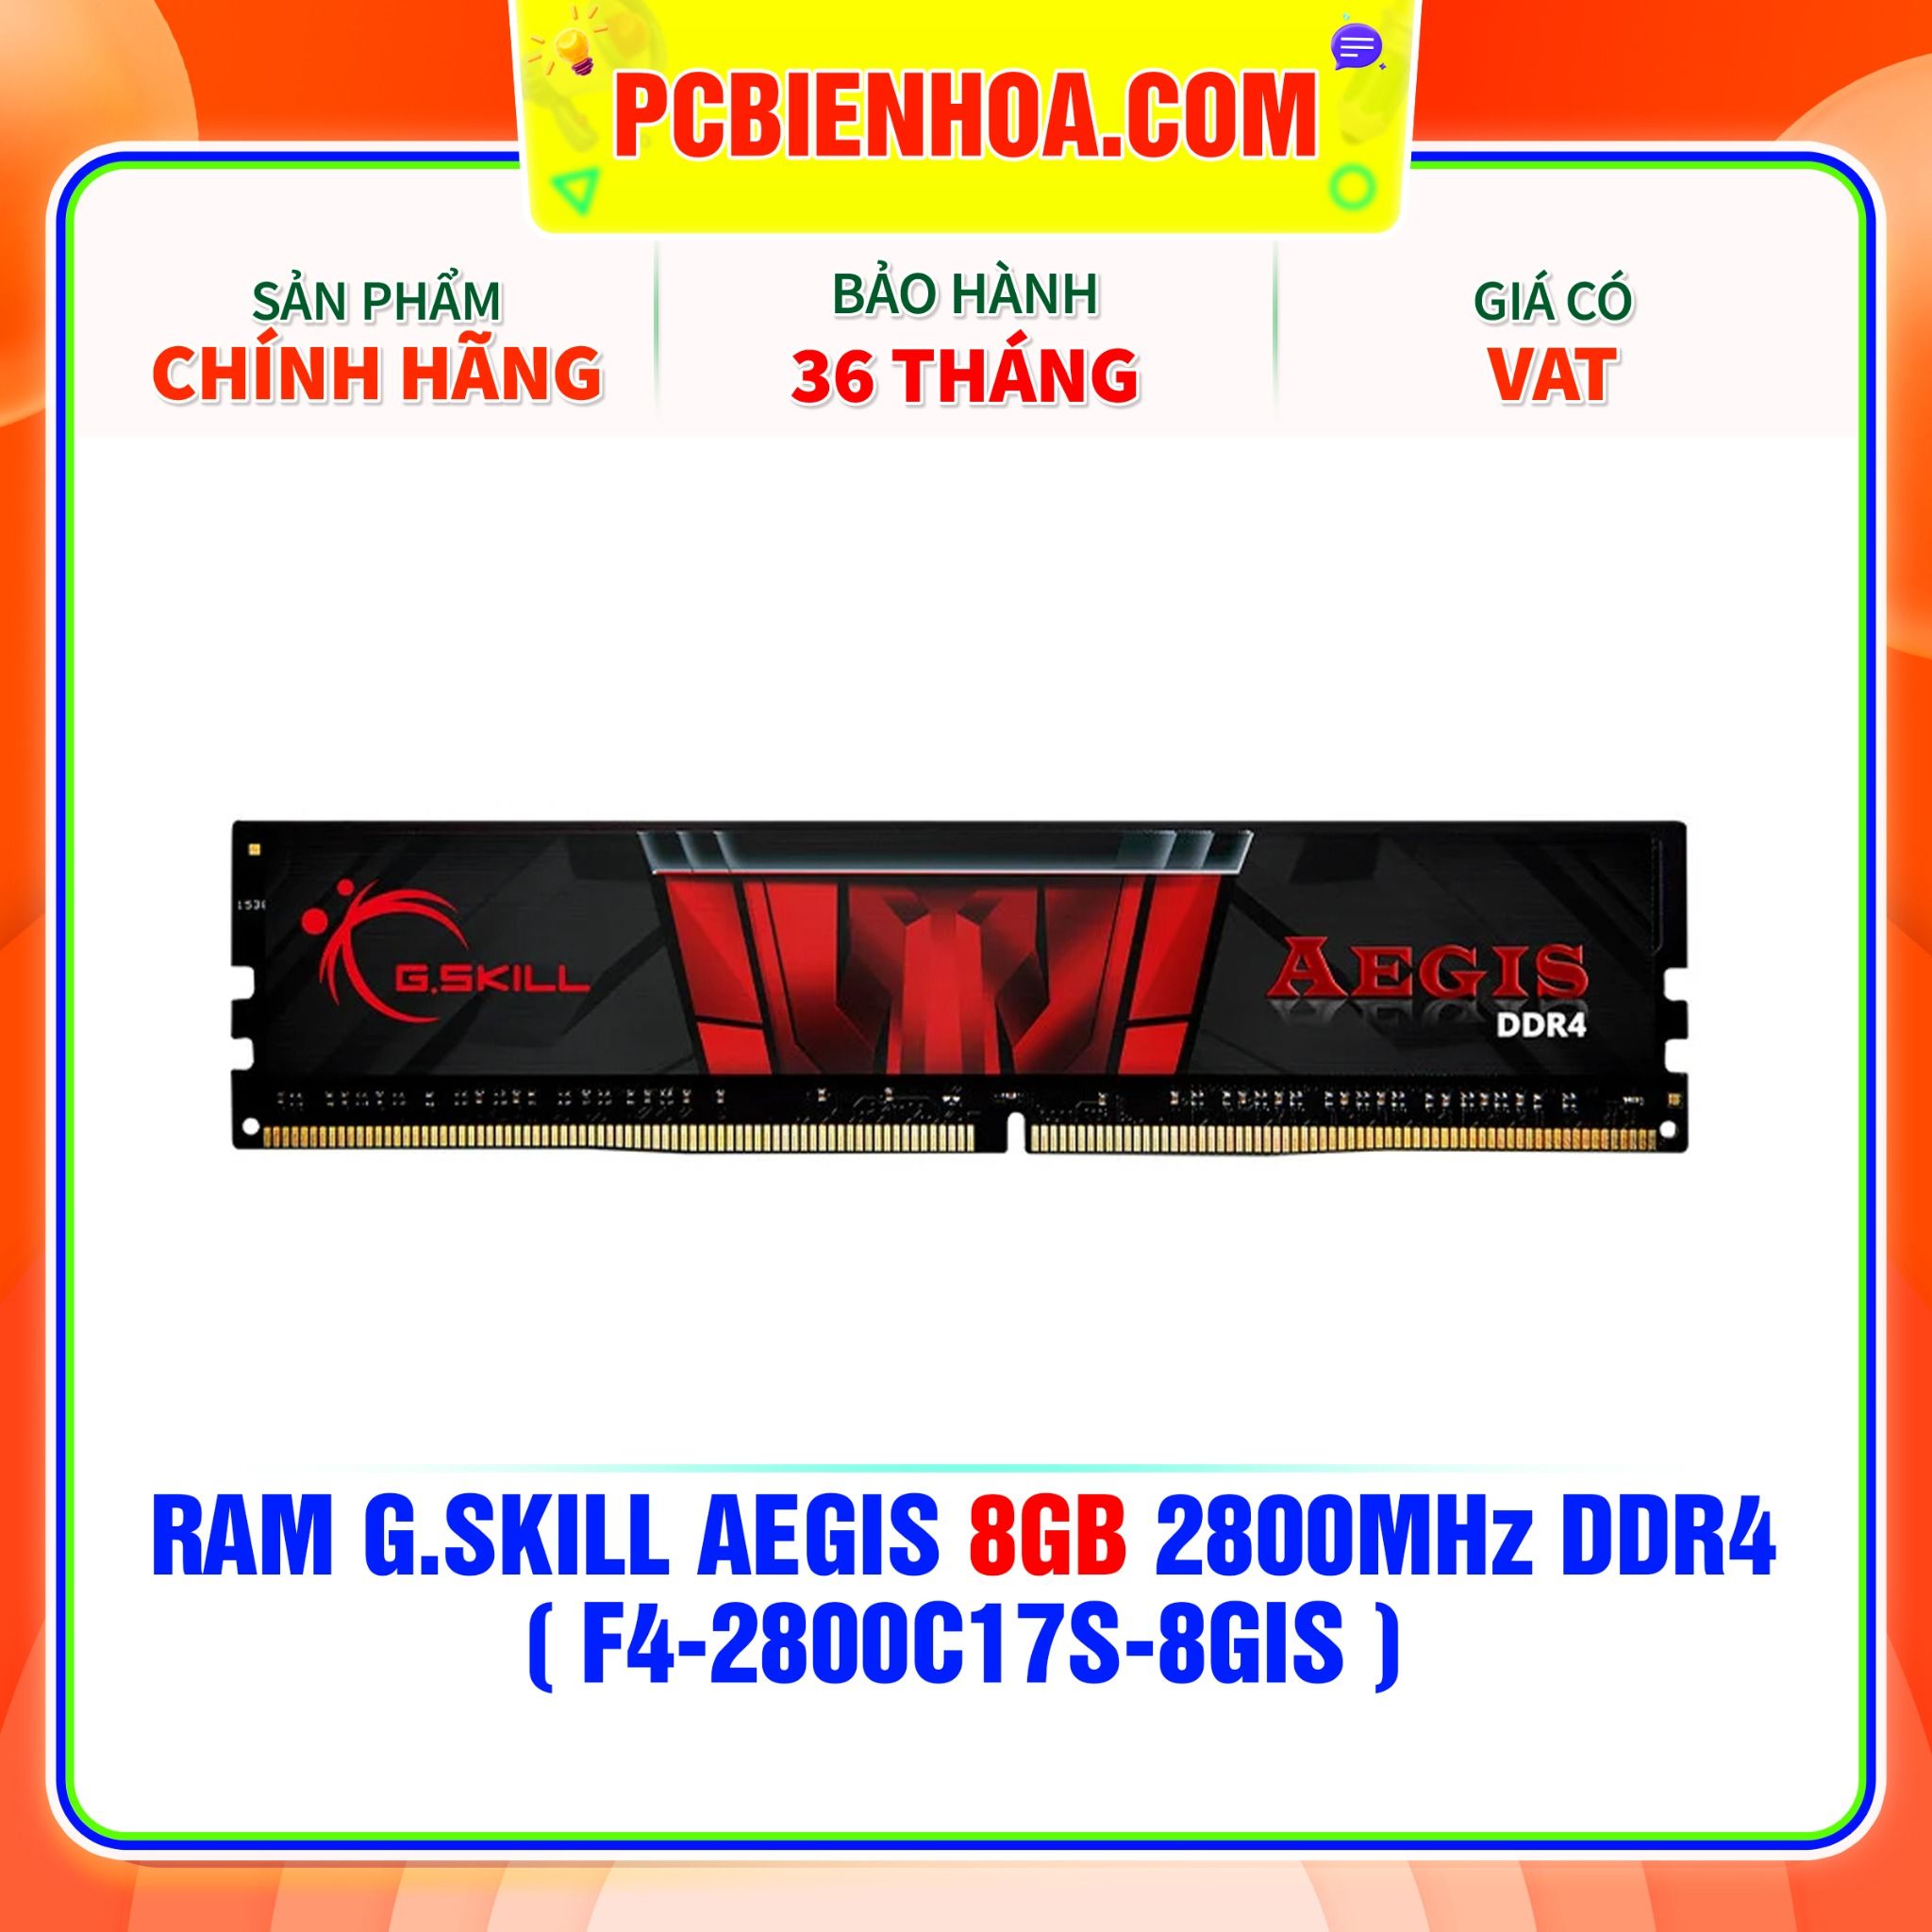  RAM G.SKILL AEGIS 8GB 2800MHz DDR4 ( F4-2800C17S-8GIS ) 